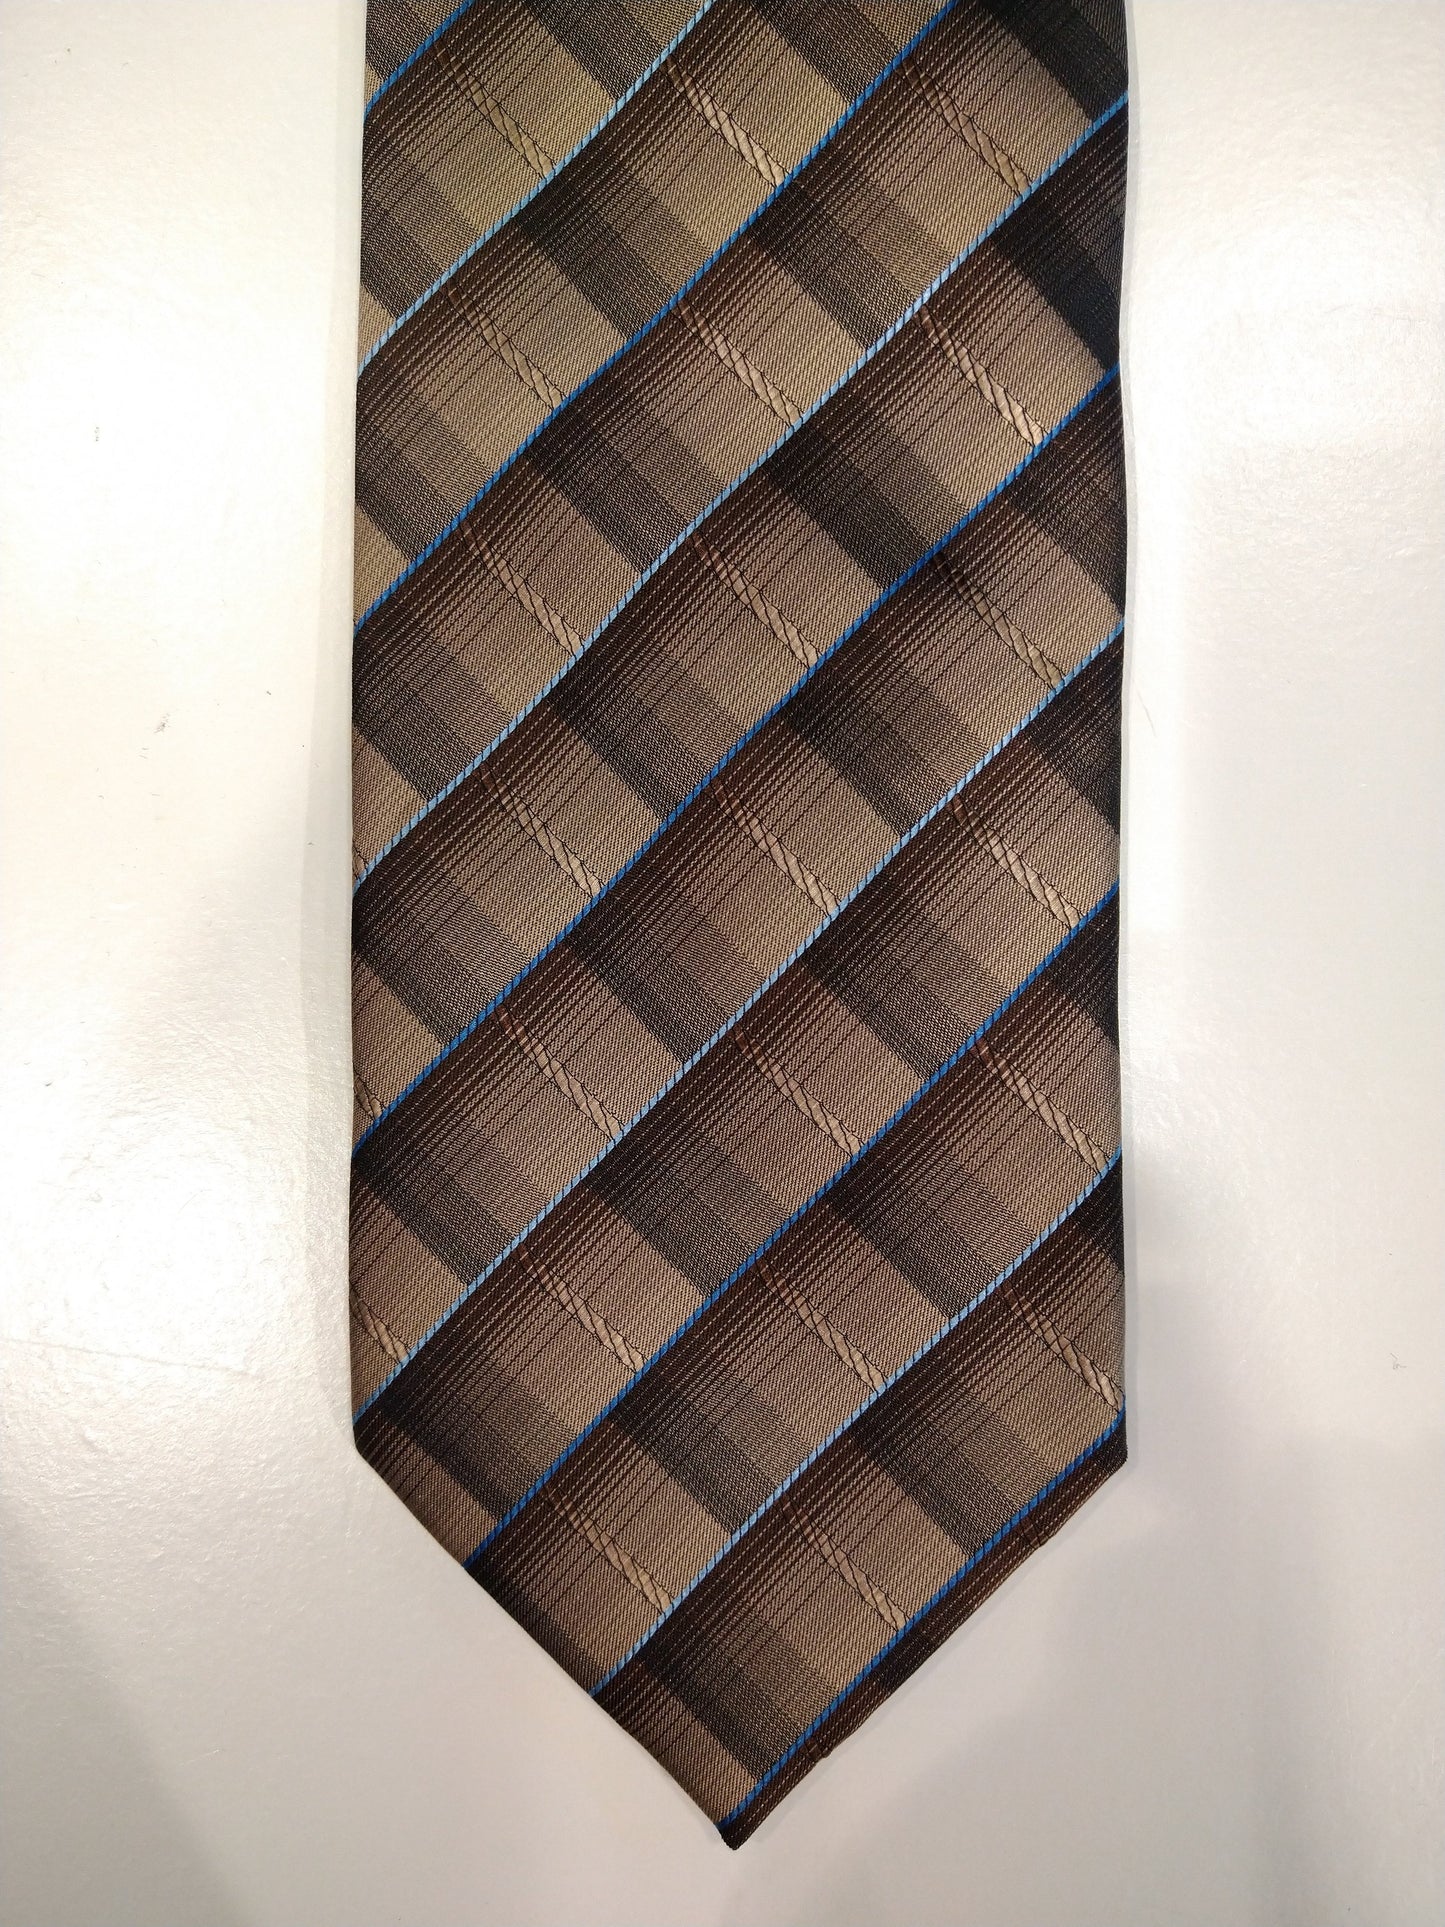 Cravatta in poliestere Canda vintage. Bel motivo vintage.